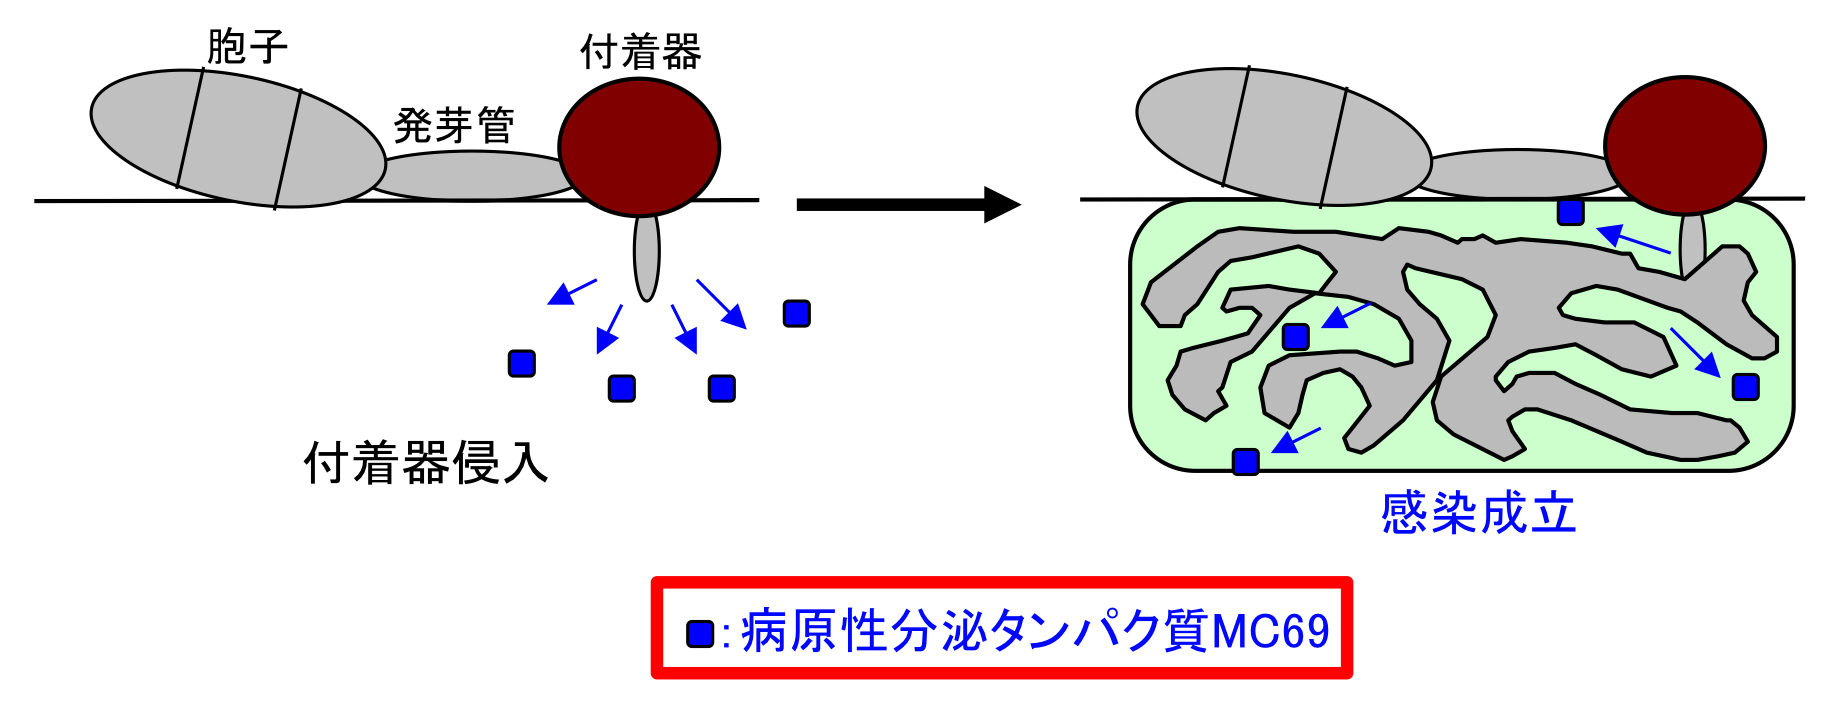 http://www.ige.tohoku.ac.jp/prg/genetics/study_report/upload_items/201205/slide1.jpg